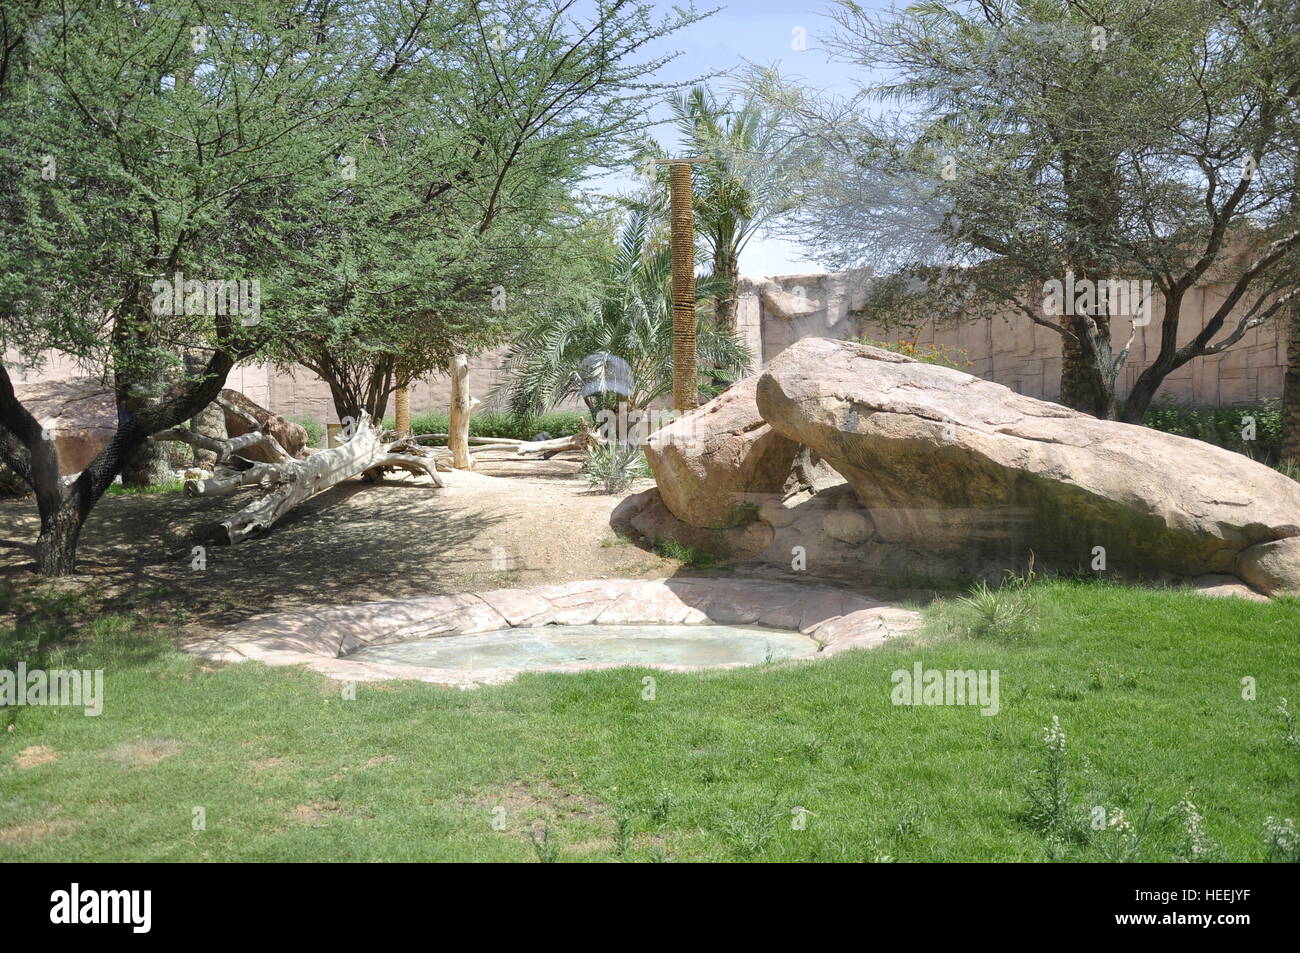 Ain Ain Zoo e fauna Uccelli rettili Giraffe tartarughe serpenti coccodrilli Lion Foto Stock